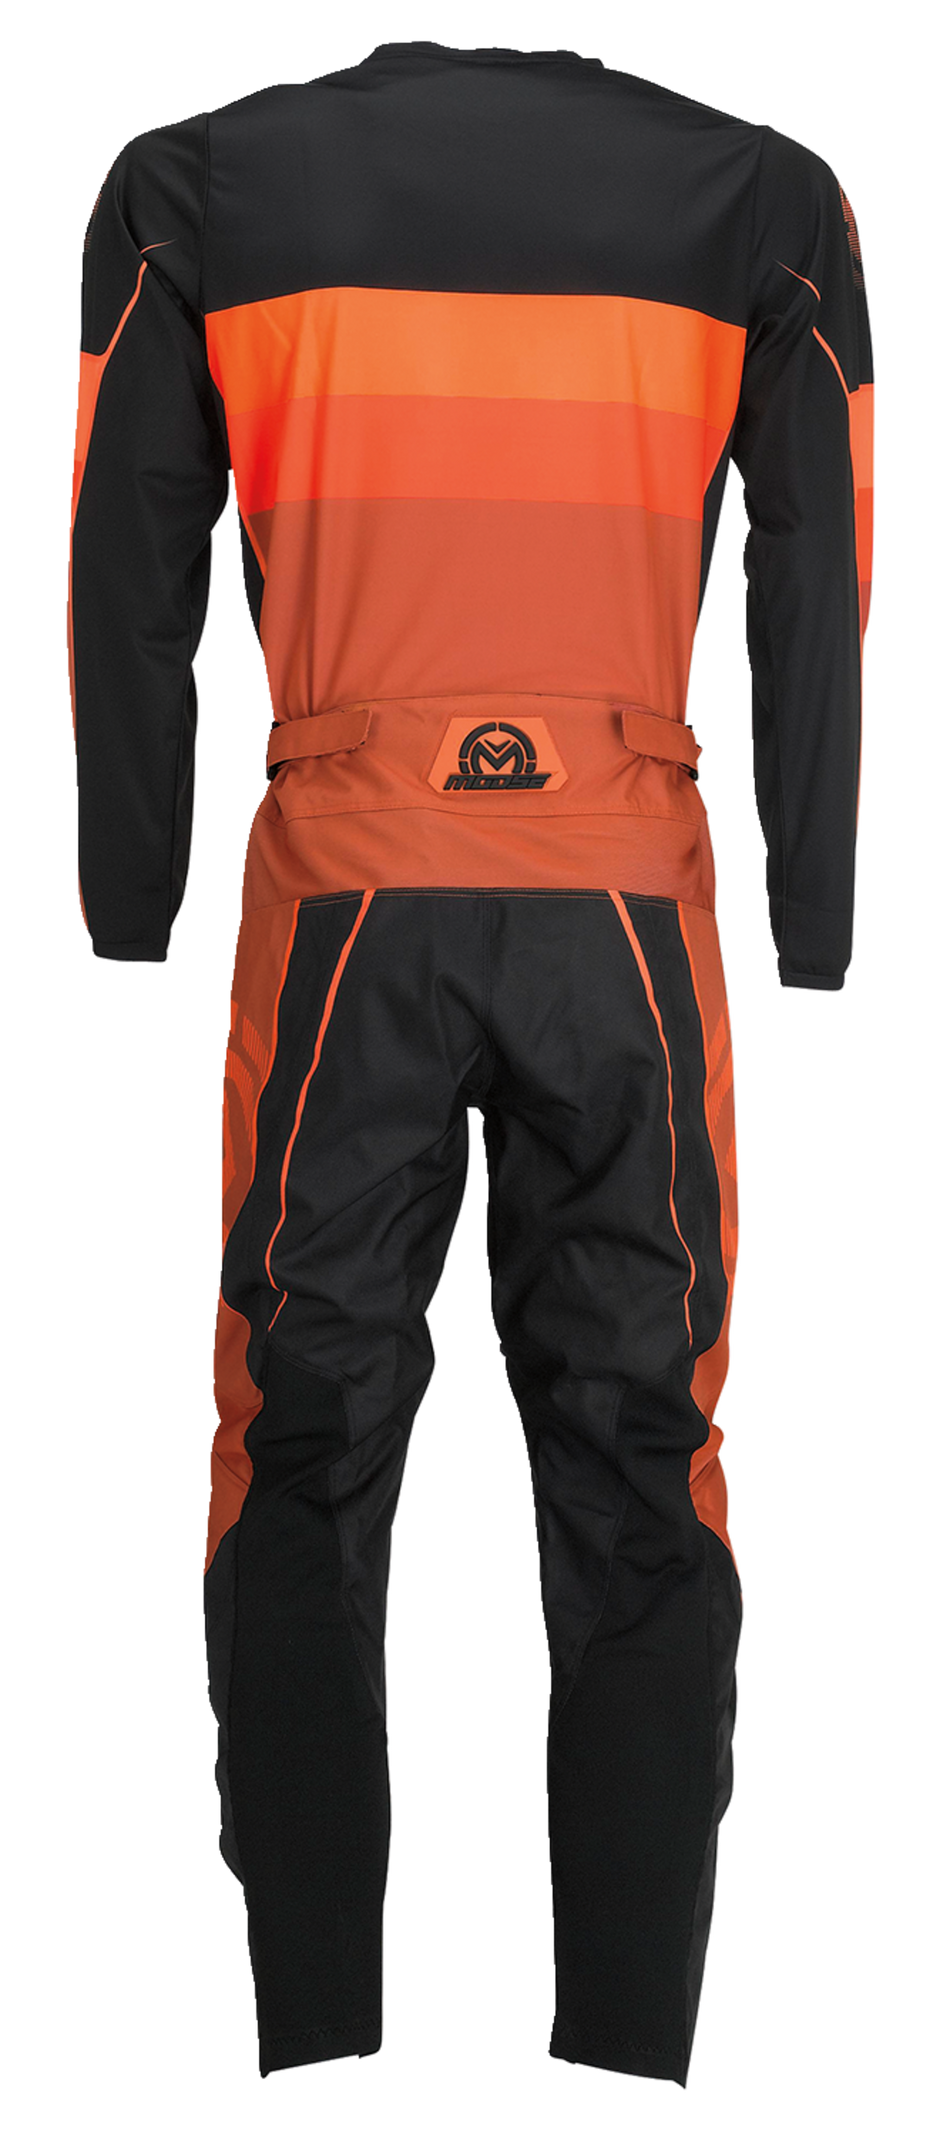 MOOSE RACING Qualifier® Jersey - Orange/Gray - XL 2910-7199